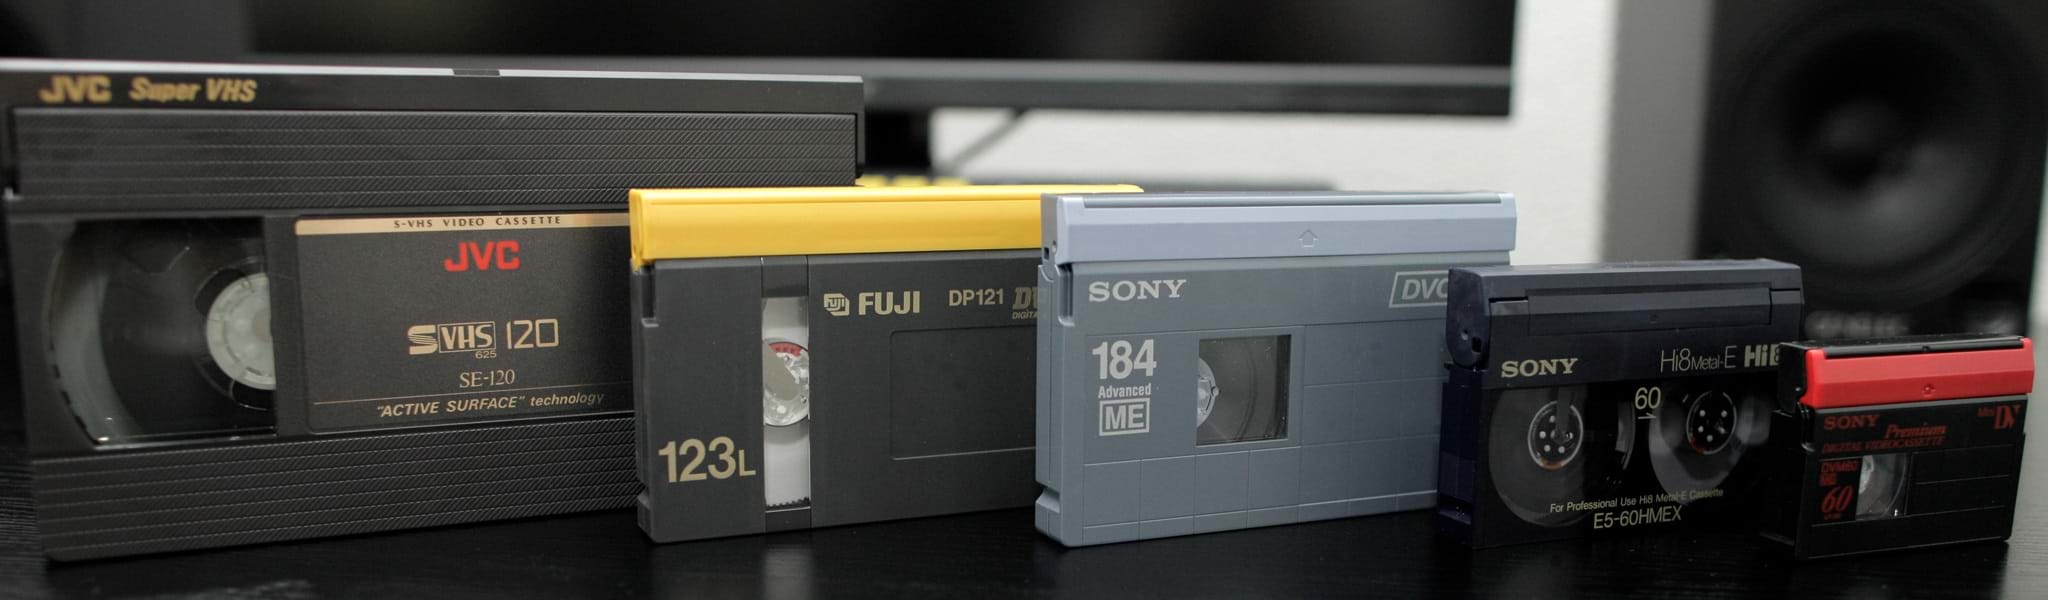 Videokassetten digitalisieren lassen in der Schweiz